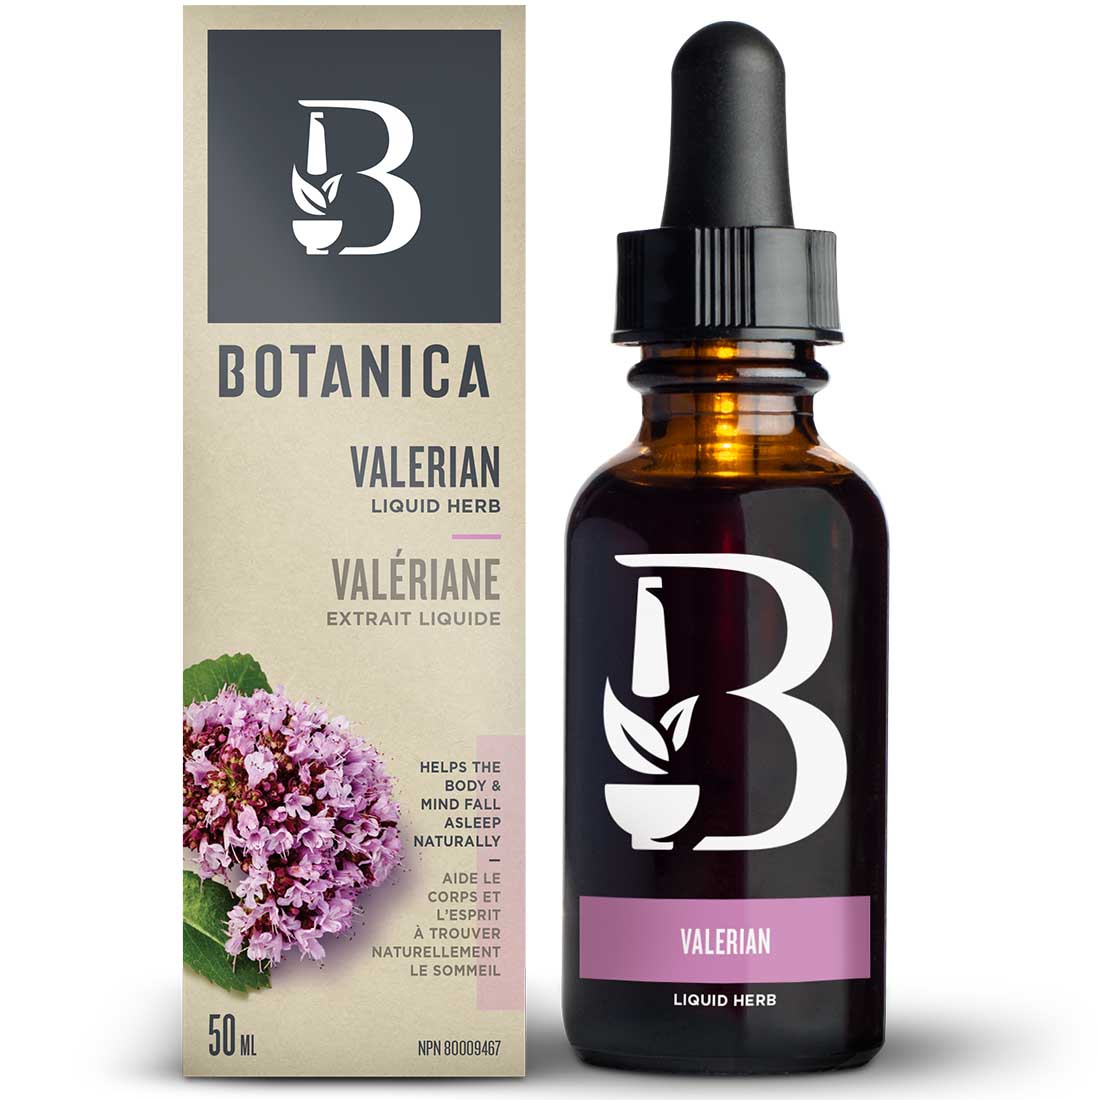 Botanica Valerian Liquid Herb (Aids Natural Sleep), 50ml